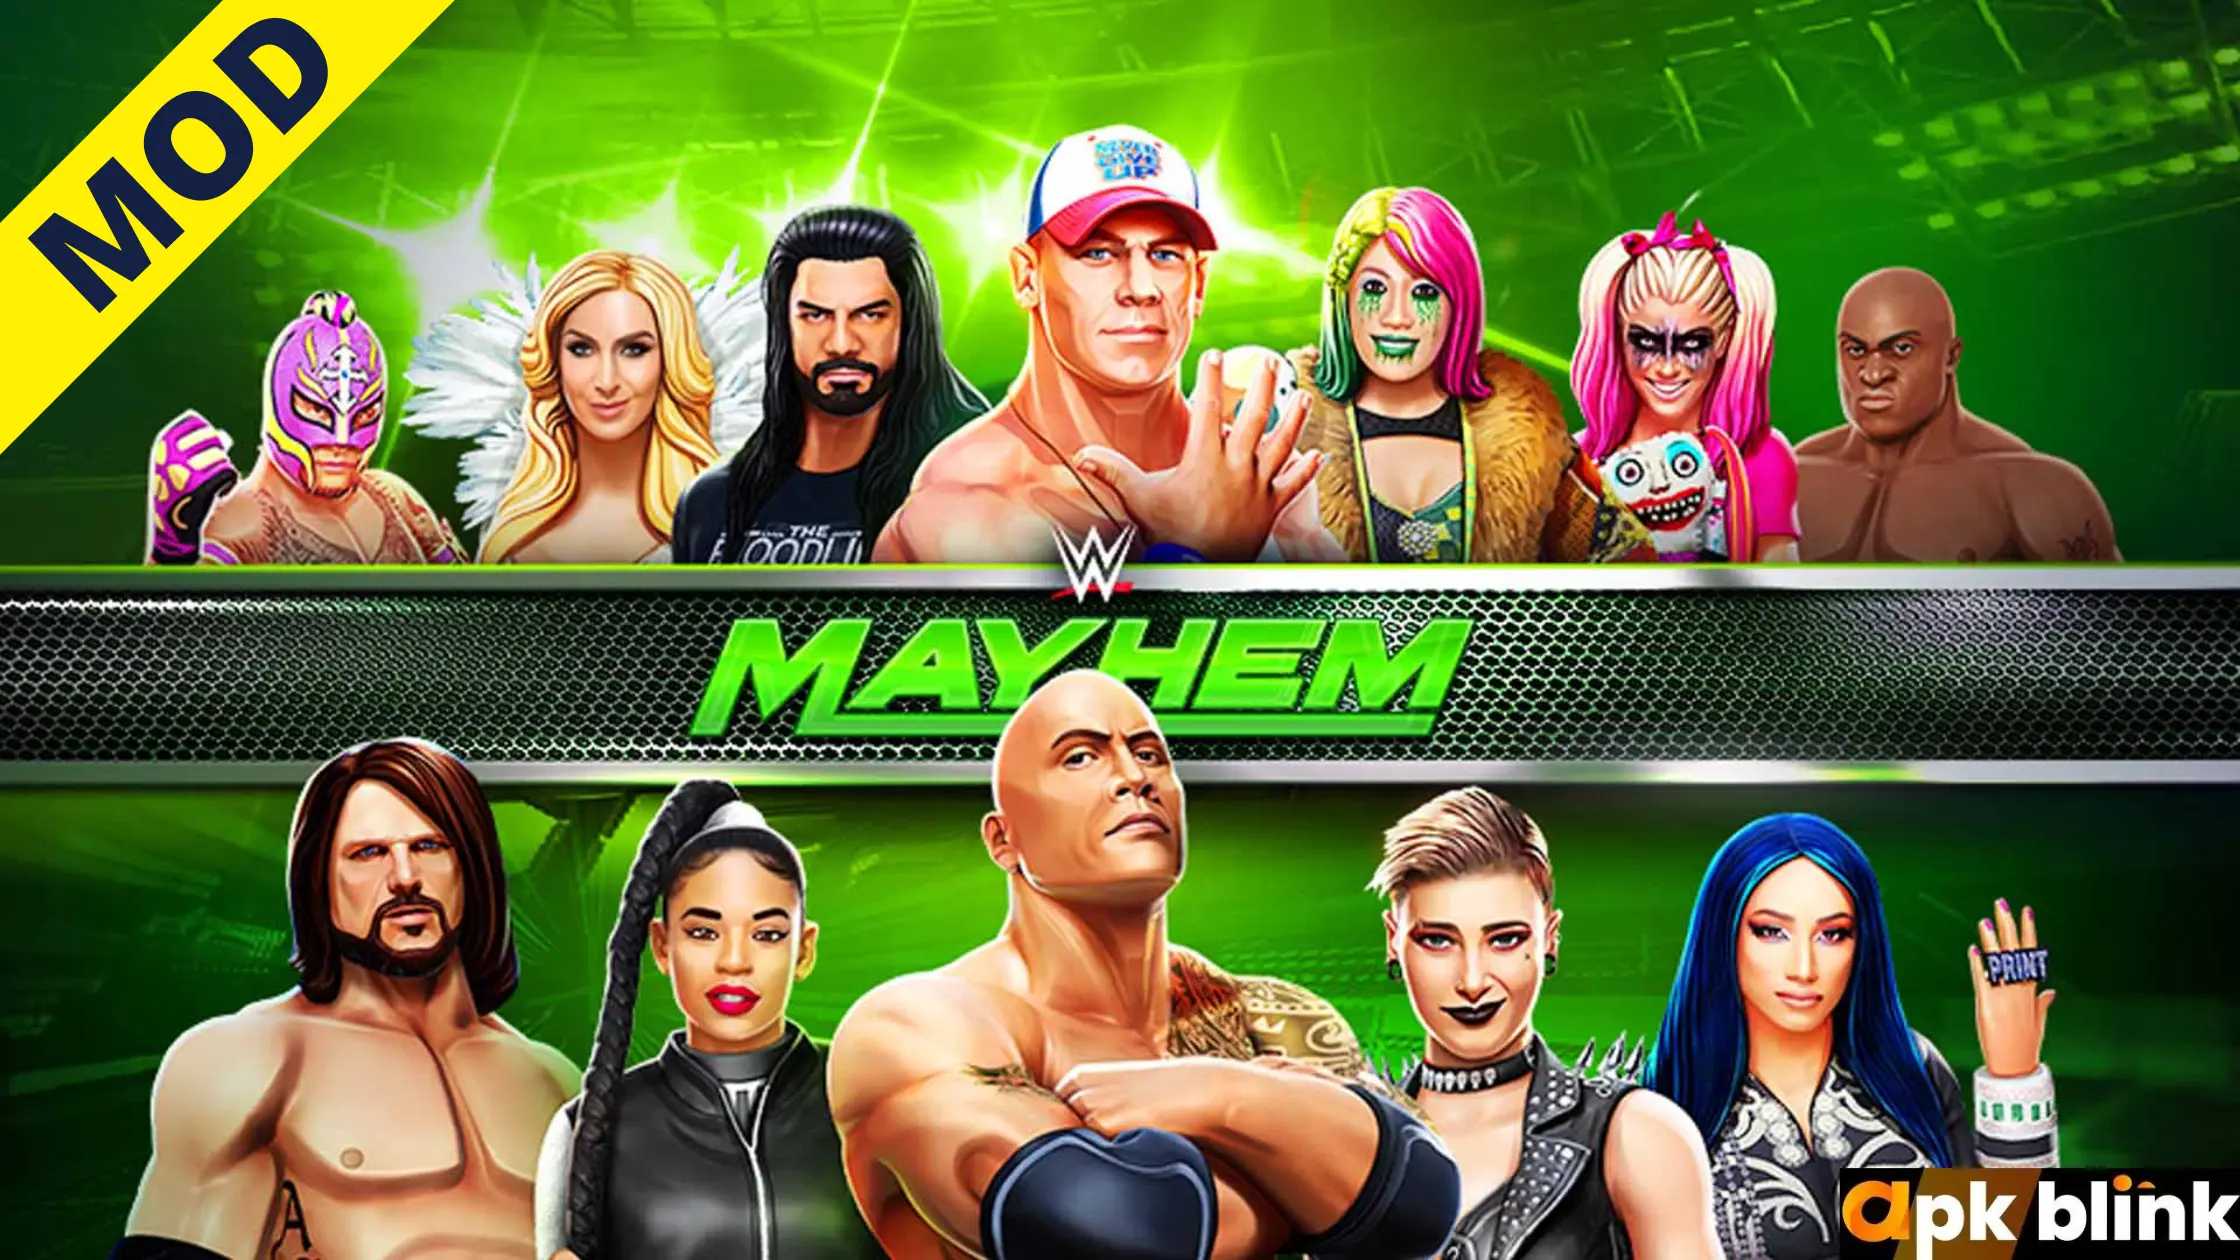 WWE Mayhem Mod APK